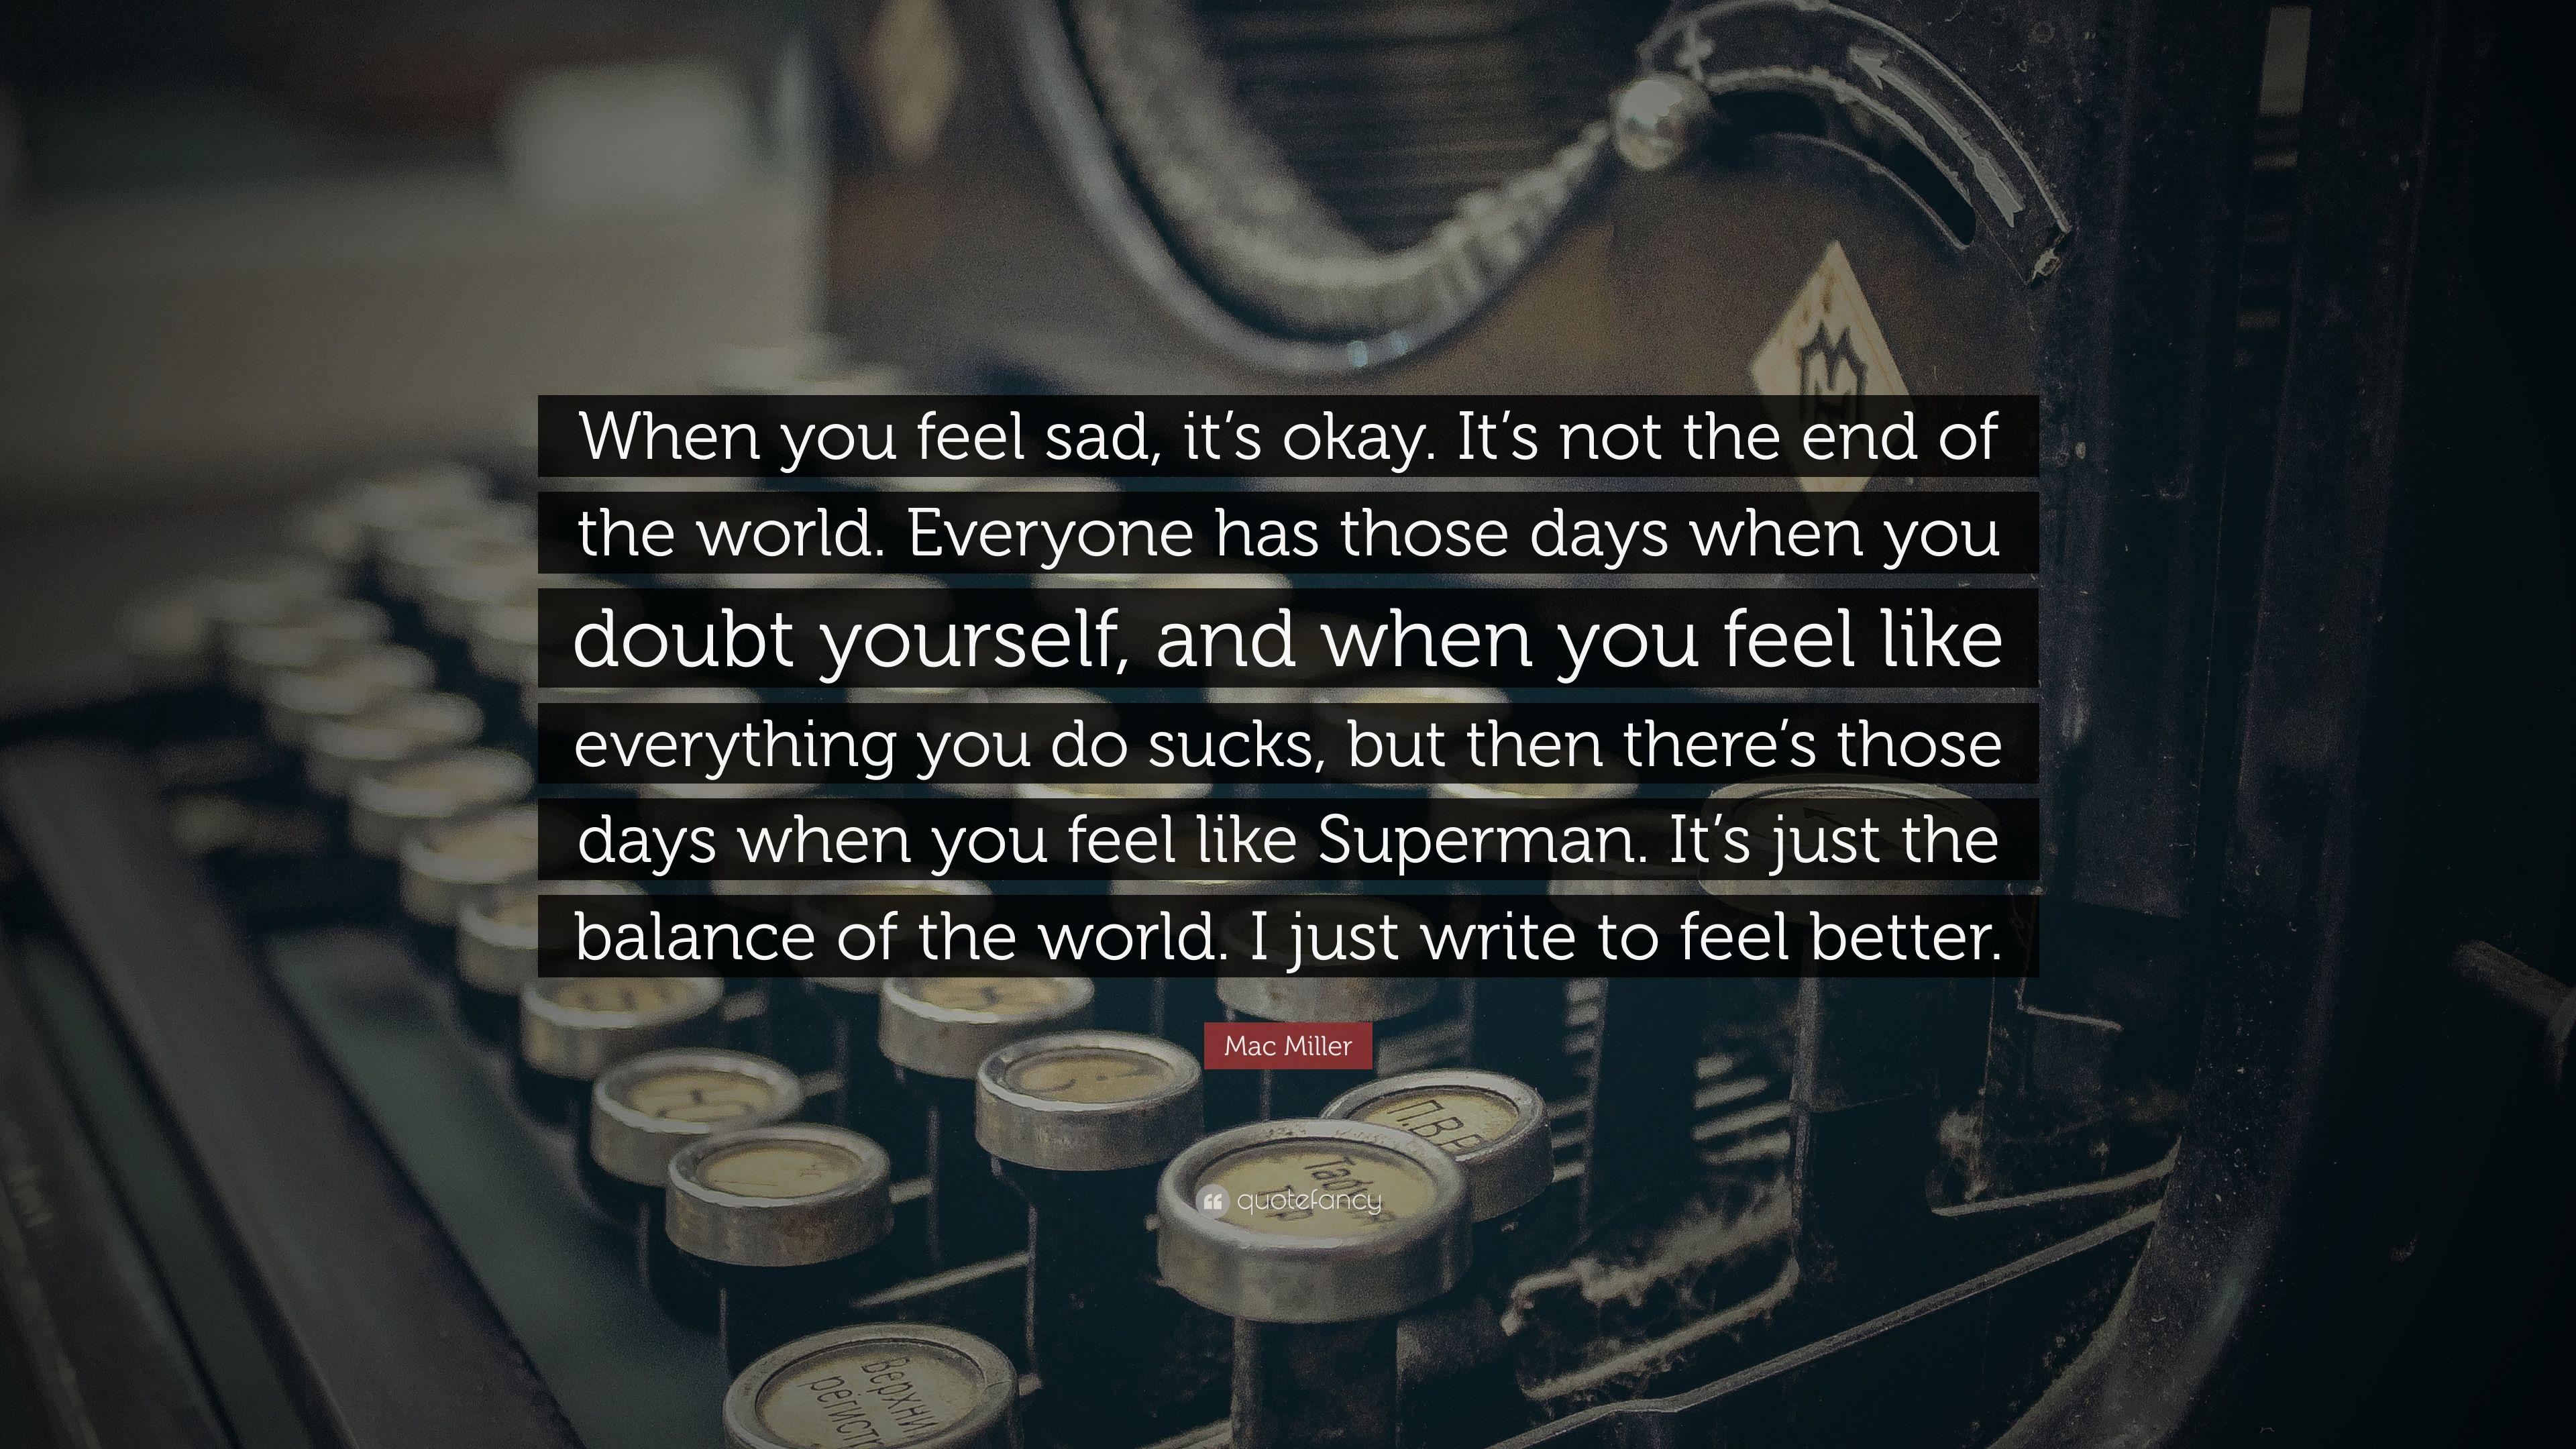 Mac Miller Quote: “When you feel sad, it's okay. It's not